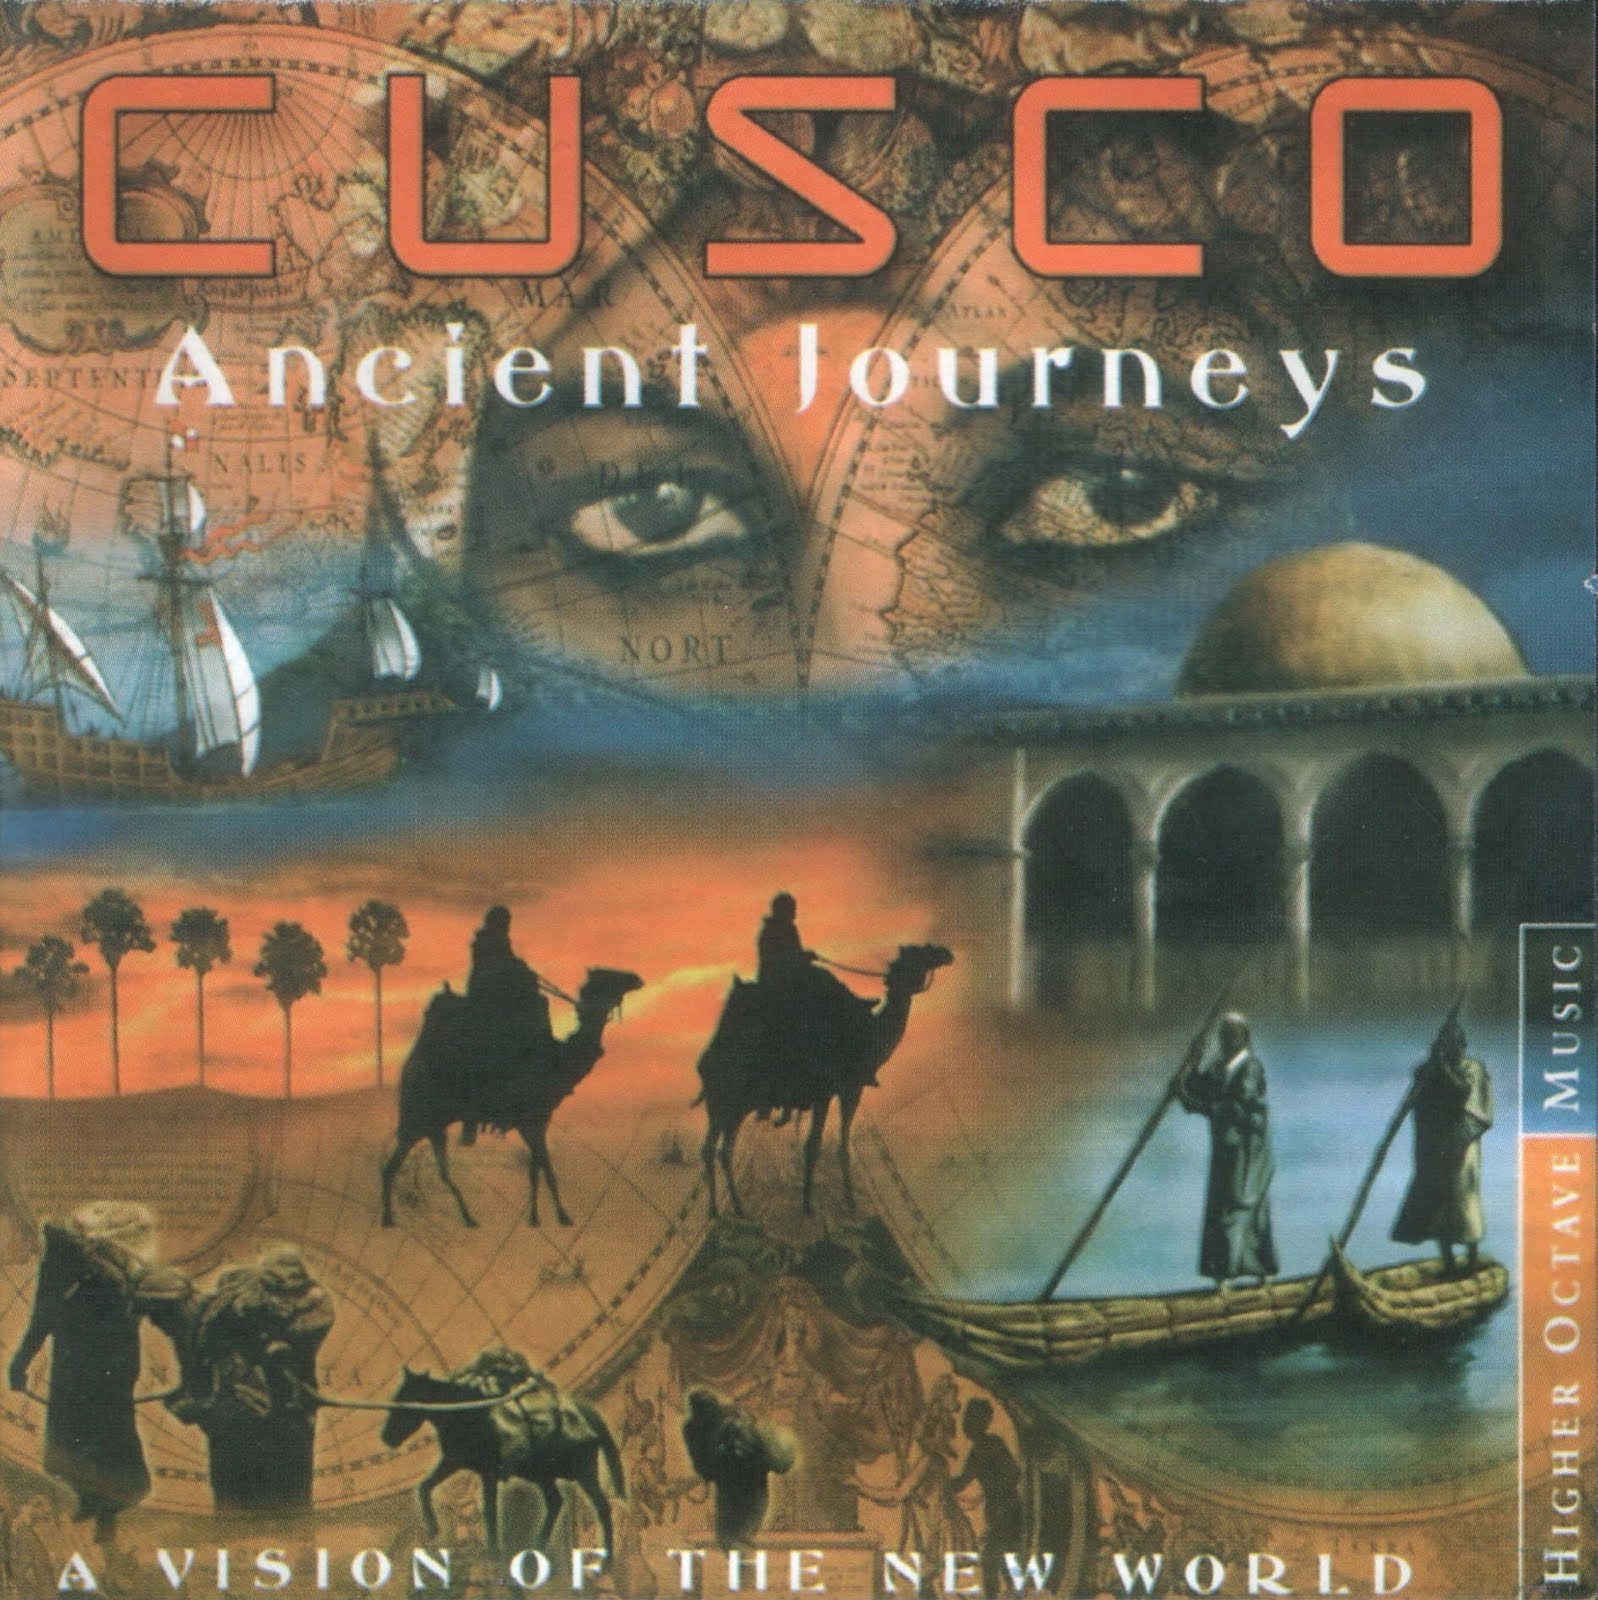 https://blogger.googleusercontent.com/img/b/R29vZ2xl/AVvXsEggKJSUr1mo4CaEI1IXwY72j6_vsO73W1k_dOKmtK4y5yQNvNJa0Xr8o01tnjXtjBQd38Tc7ekEZ9okvc7JP5ykBXHvgjme8vJPKk4HGvWSOUftZWLPdVA6VqBHHLwmrU9aMpL4mABBt60/s1600/Cusco+-+Ancient+Journeys+-+Front.jpg